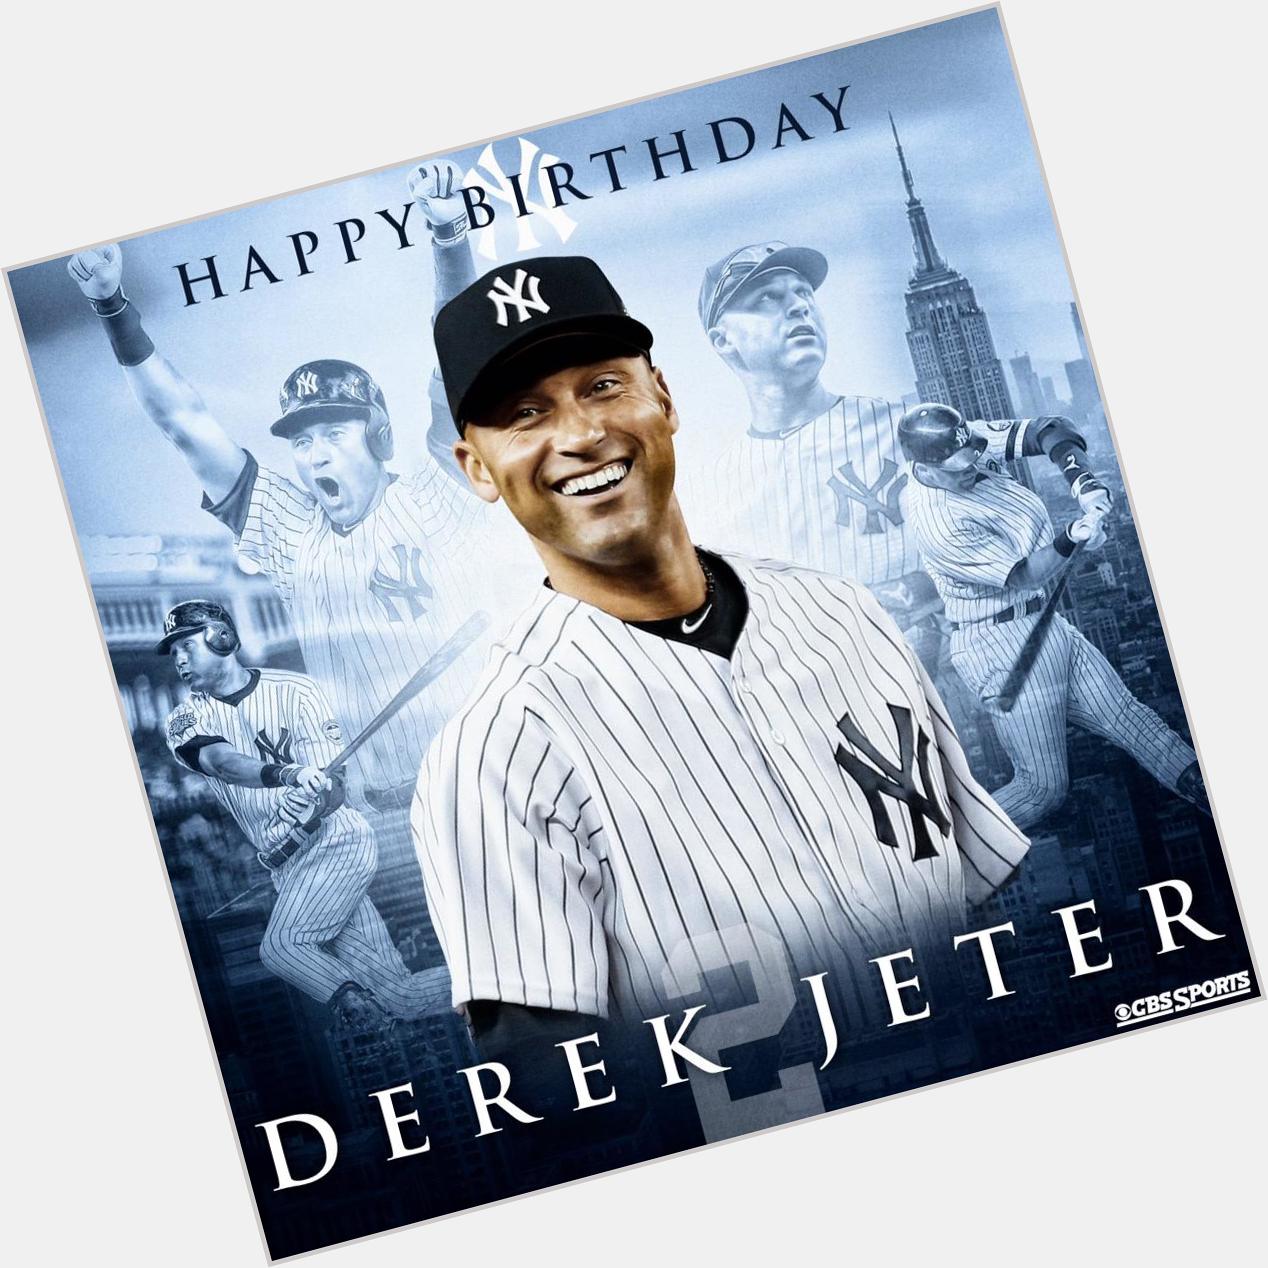 Happy Birthday to The Captain, Derek Jeter 